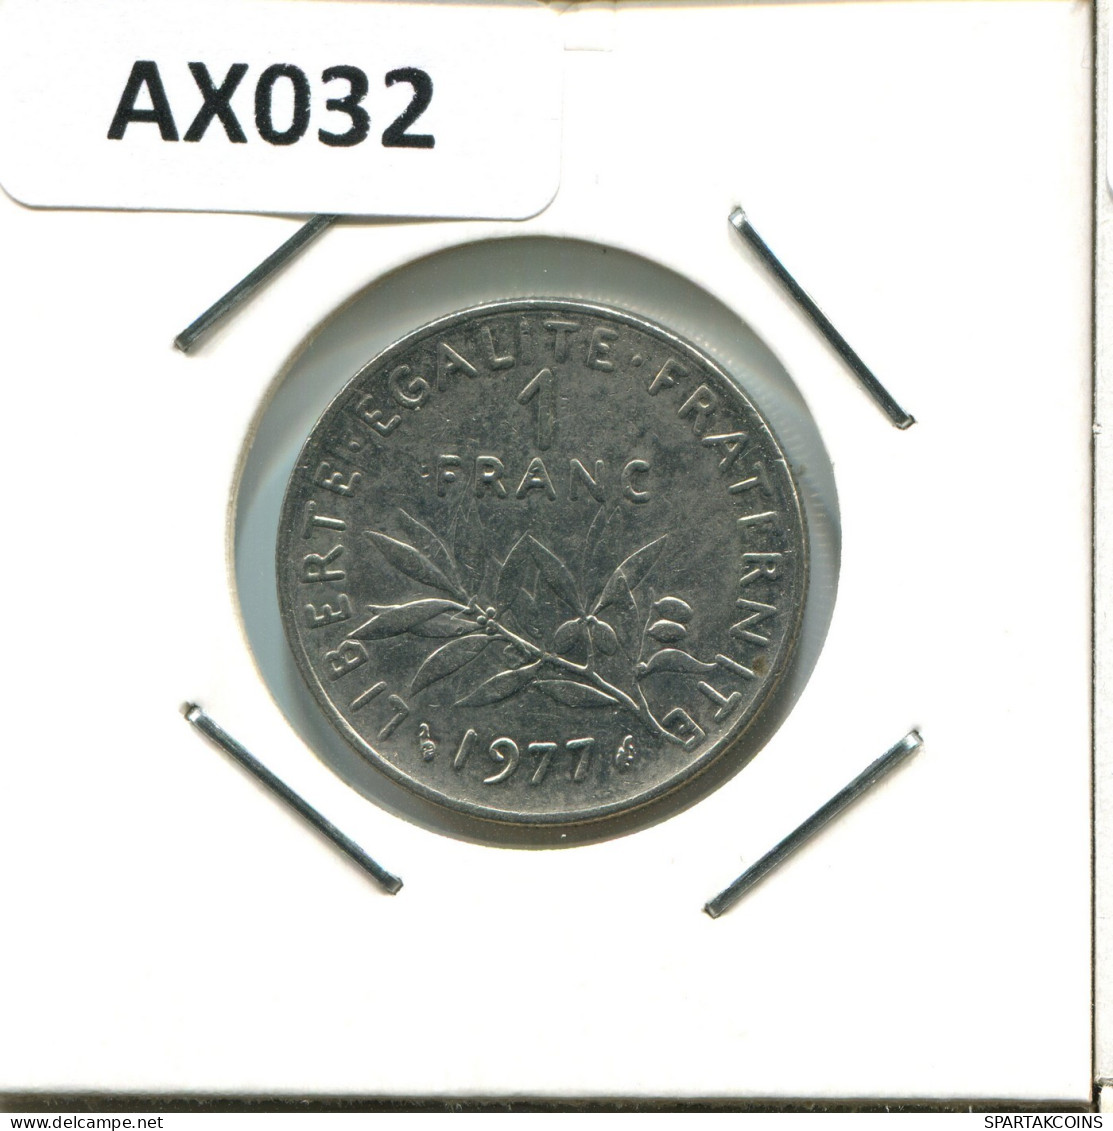 1 FRANC 1977 FRANCE Pièce #AX032.F.A - 1 Franc